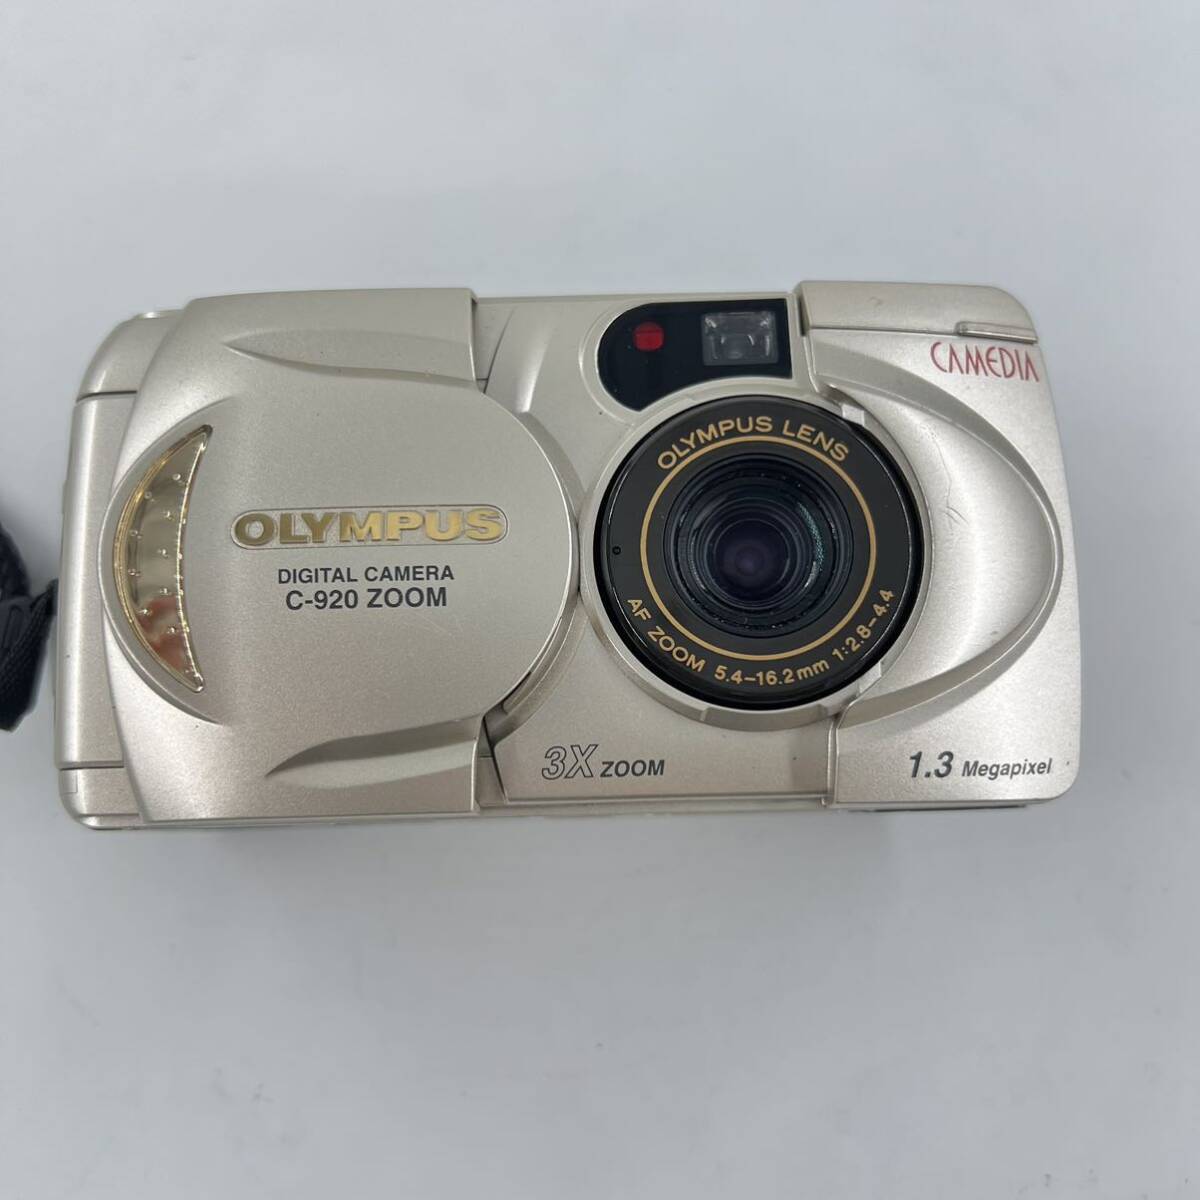 K4b OLYMPUS デジカメ デジタルカメラ CAMEDIA C-920 1.3Mega a5.4-16.2mm 1:2.8-4.4 M-40 5.0Mega バッテリー有 オリンパスマスター_画像2